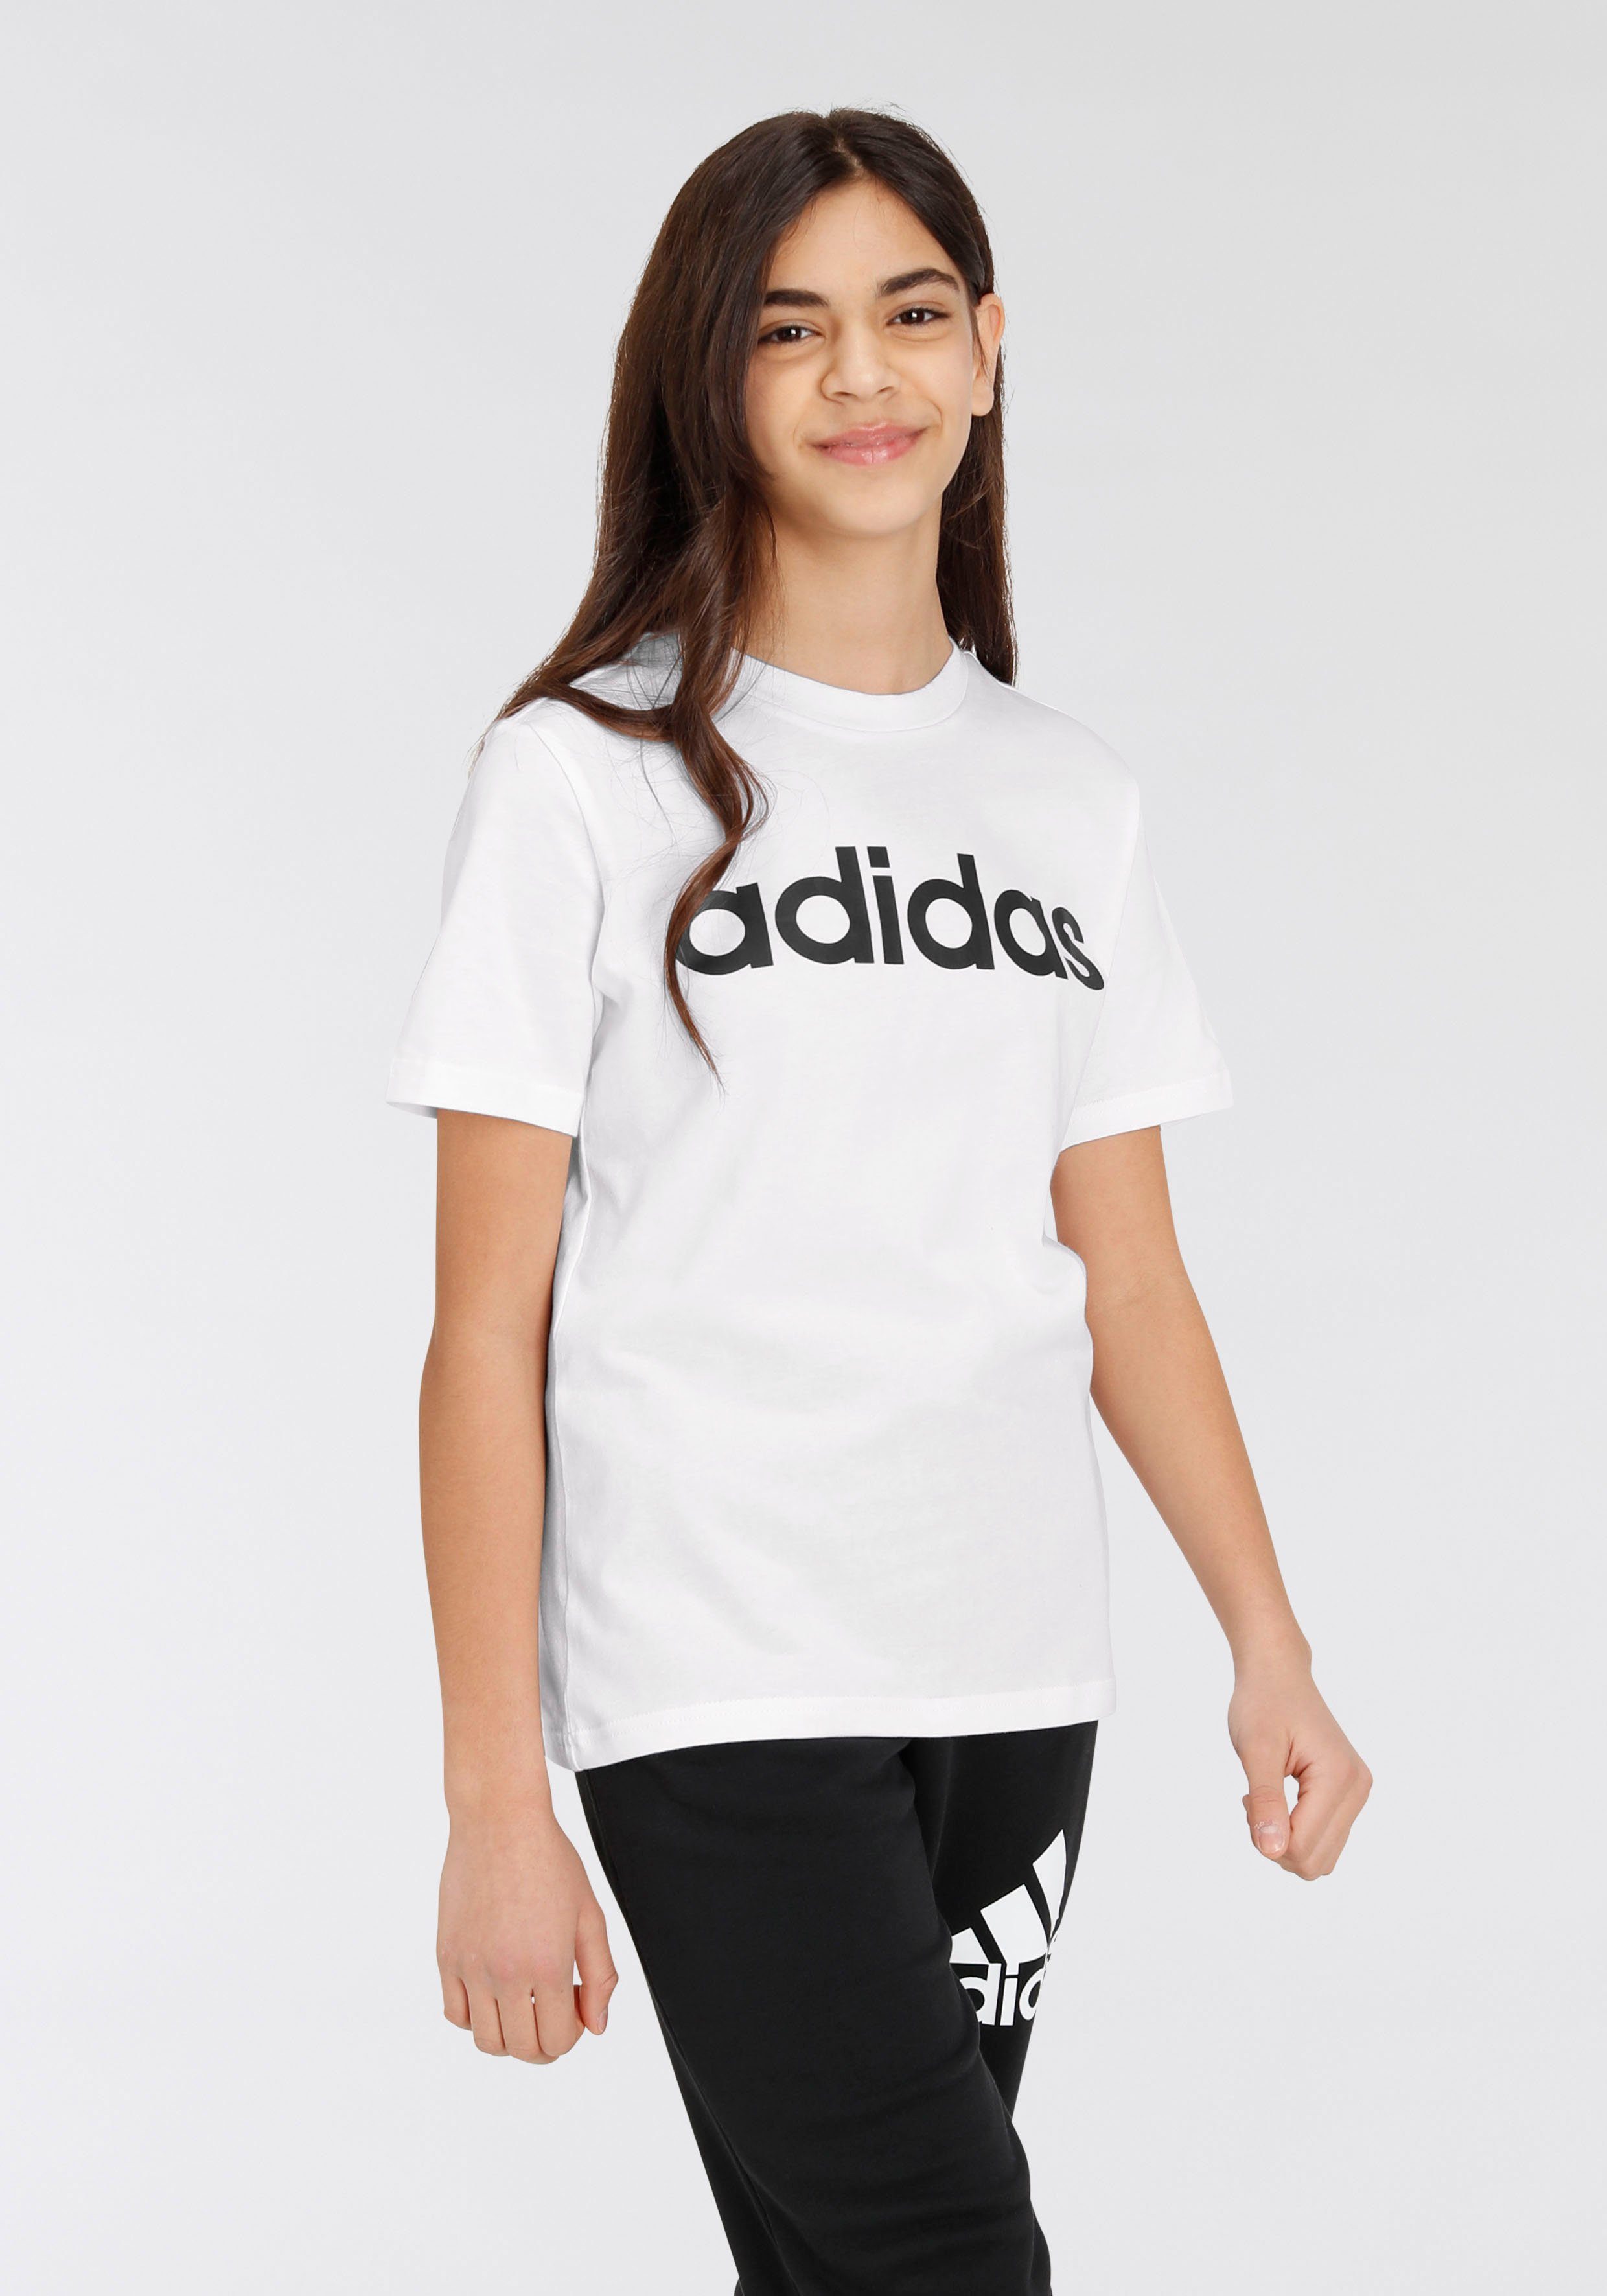 / LINEAR Black White ESSENTIALS COTTON Sportswear T-Shirt adidas LOGO